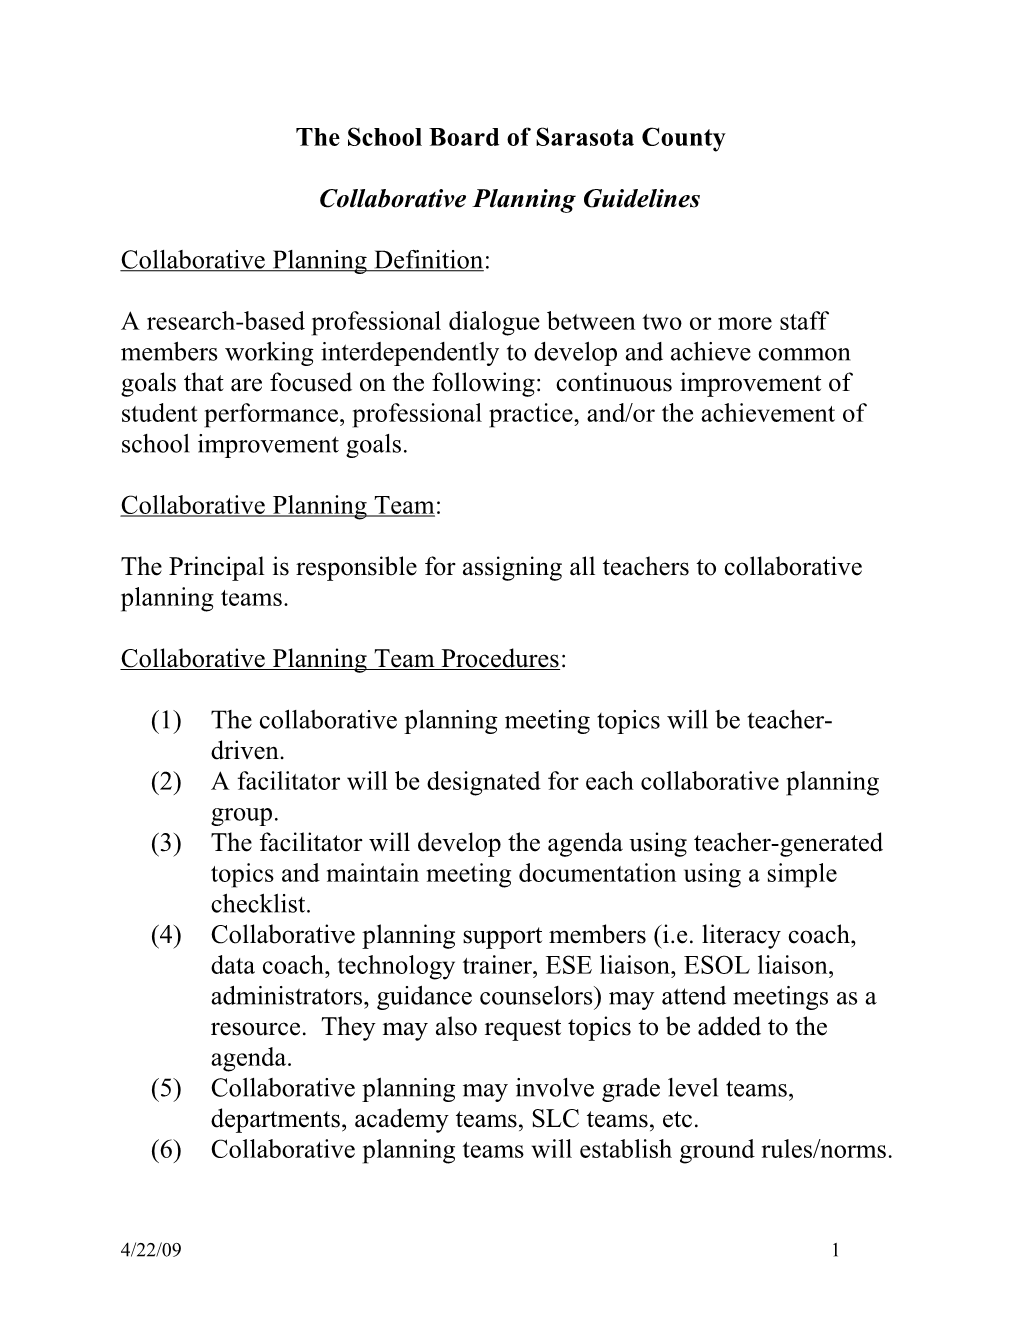 Collaborative Planning Definition